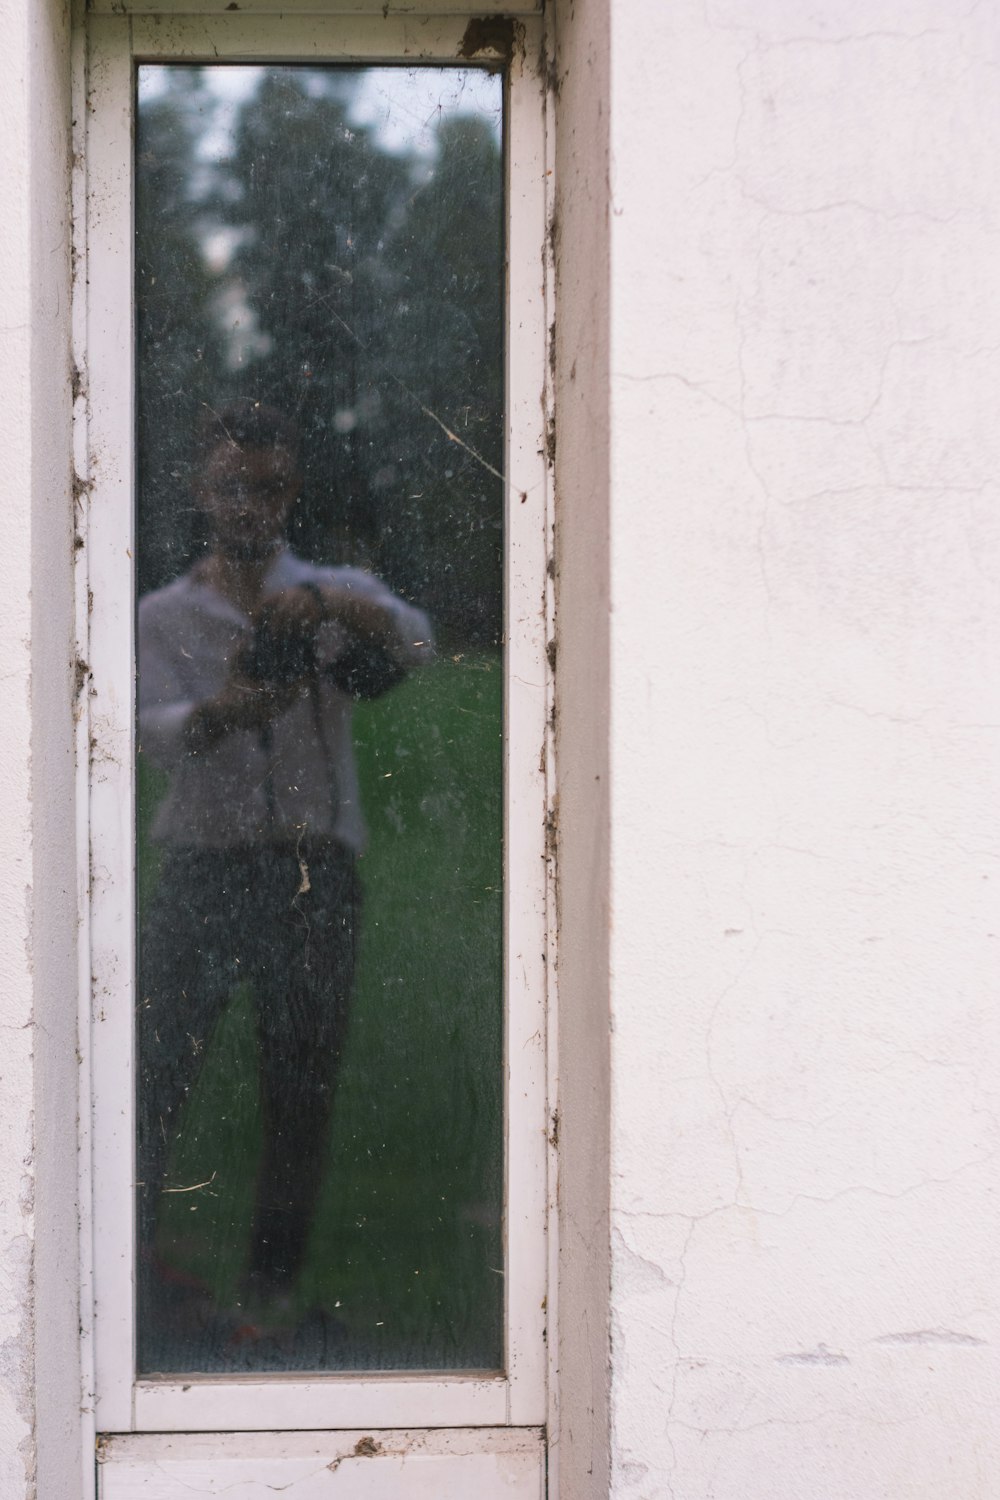 man in black jacket standing in front of glass window